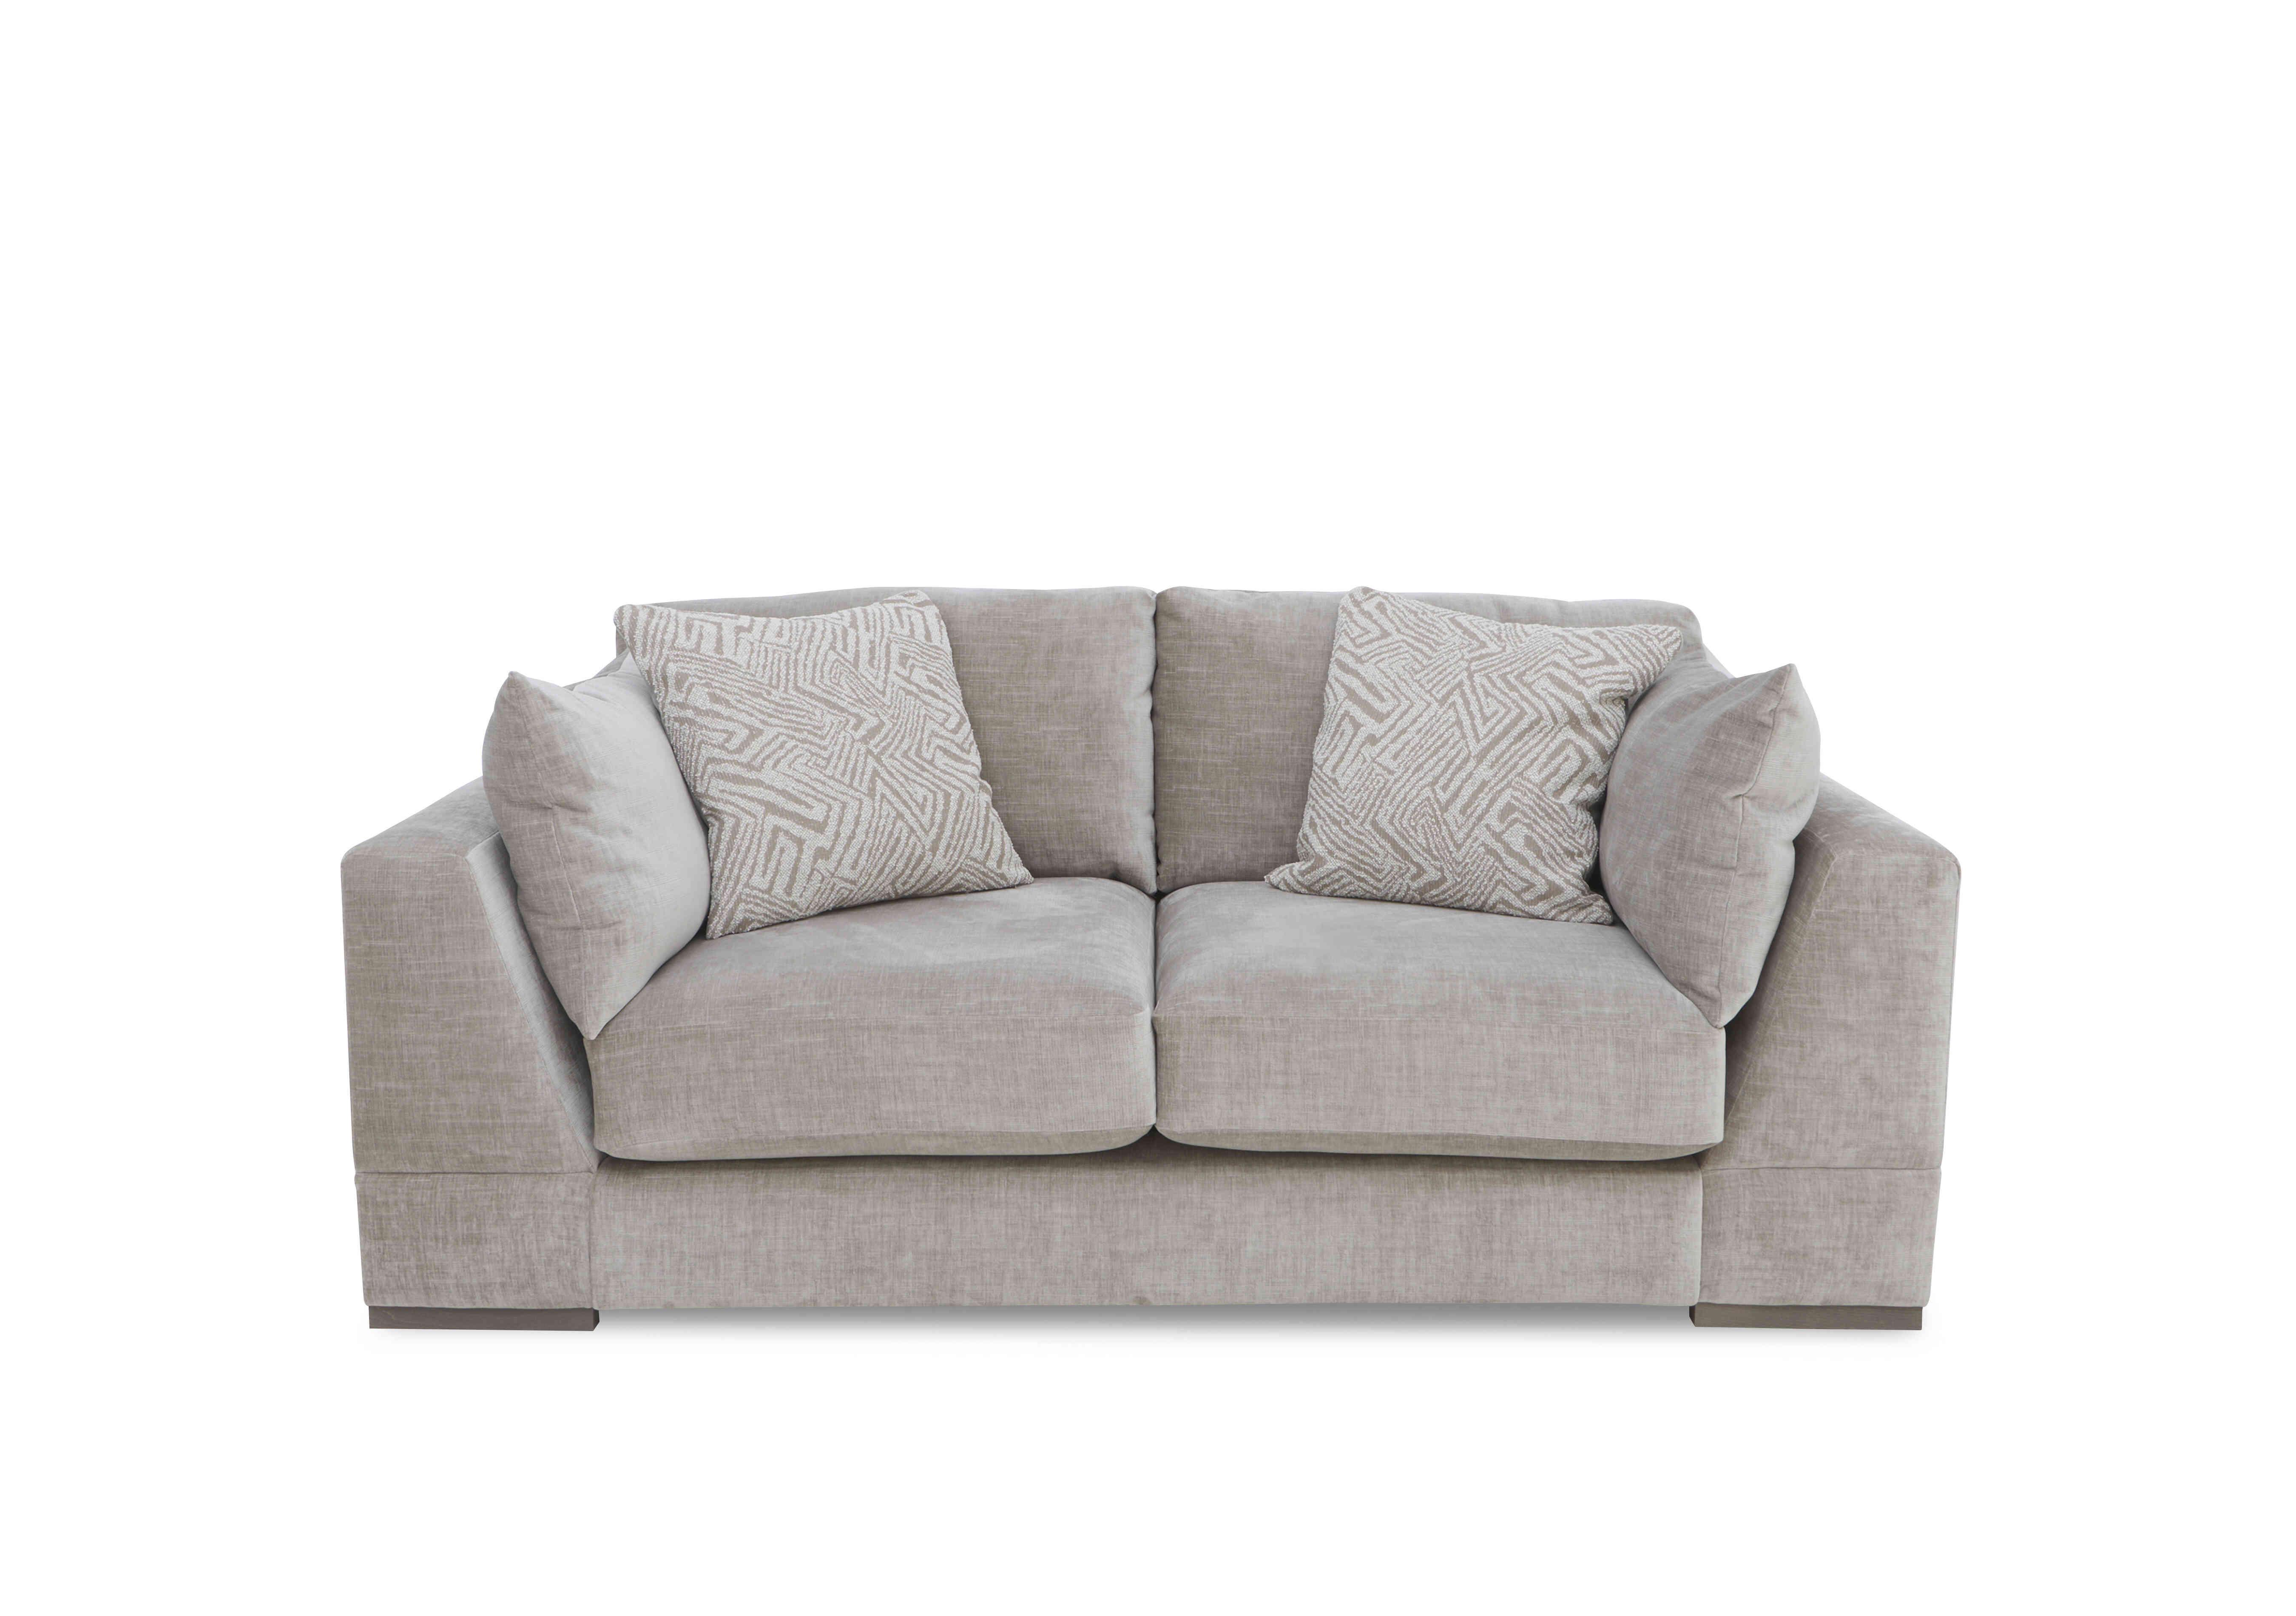 Billie 2 Seater Sofa in Stone Grey Ash Ft on Furniture Village